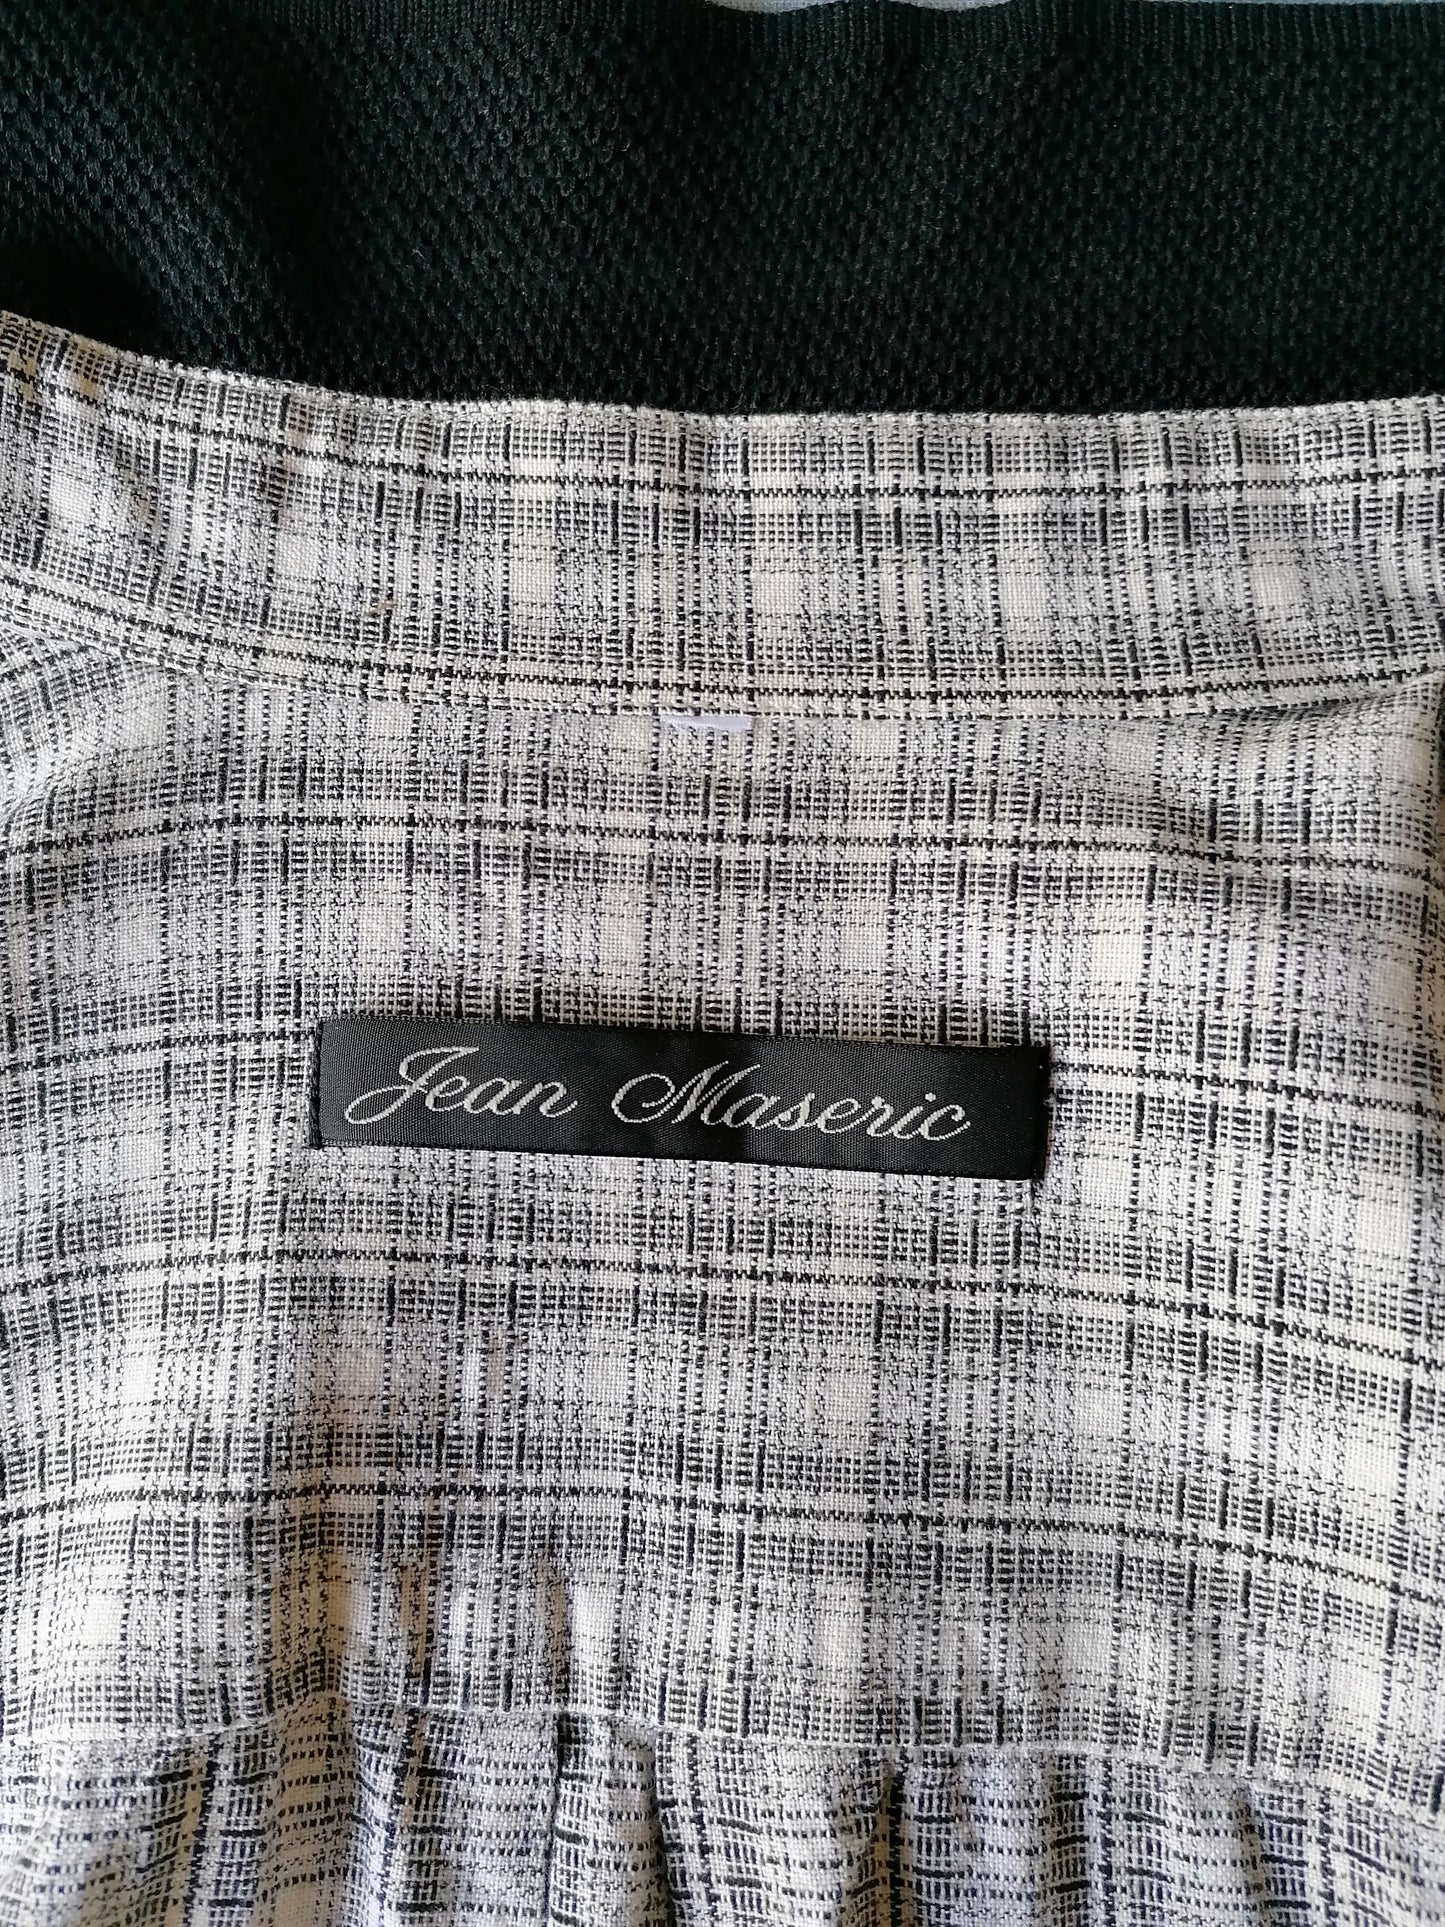 Vintage Jean Maseric Shirt. Beige Black Checked. Tamaño XL